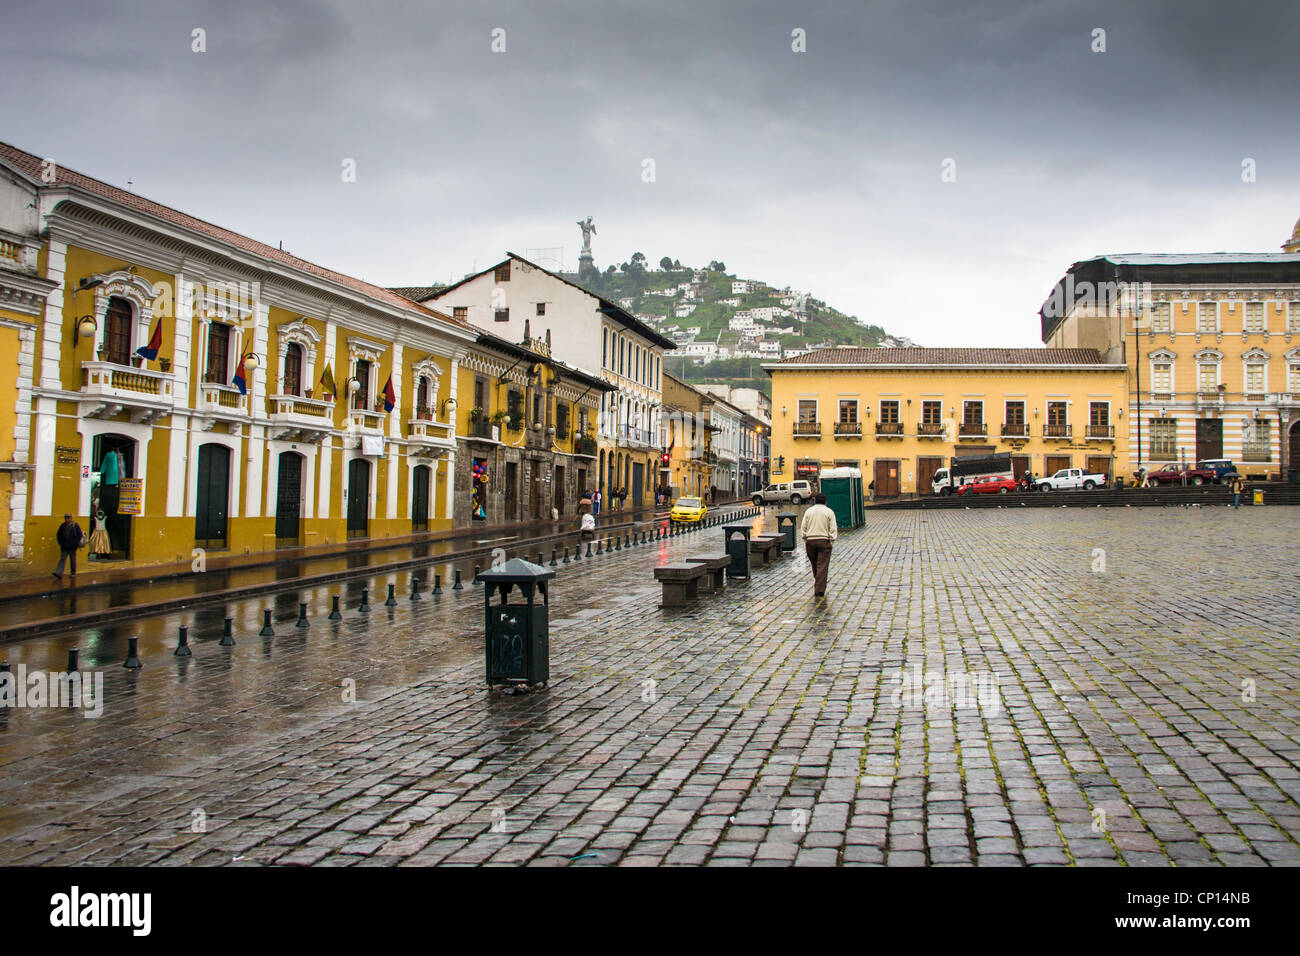 Rainy day at "San Francisco Square" or "Plaza San Francisco" in Old Town, Quito, Ecuador. Stock Photo